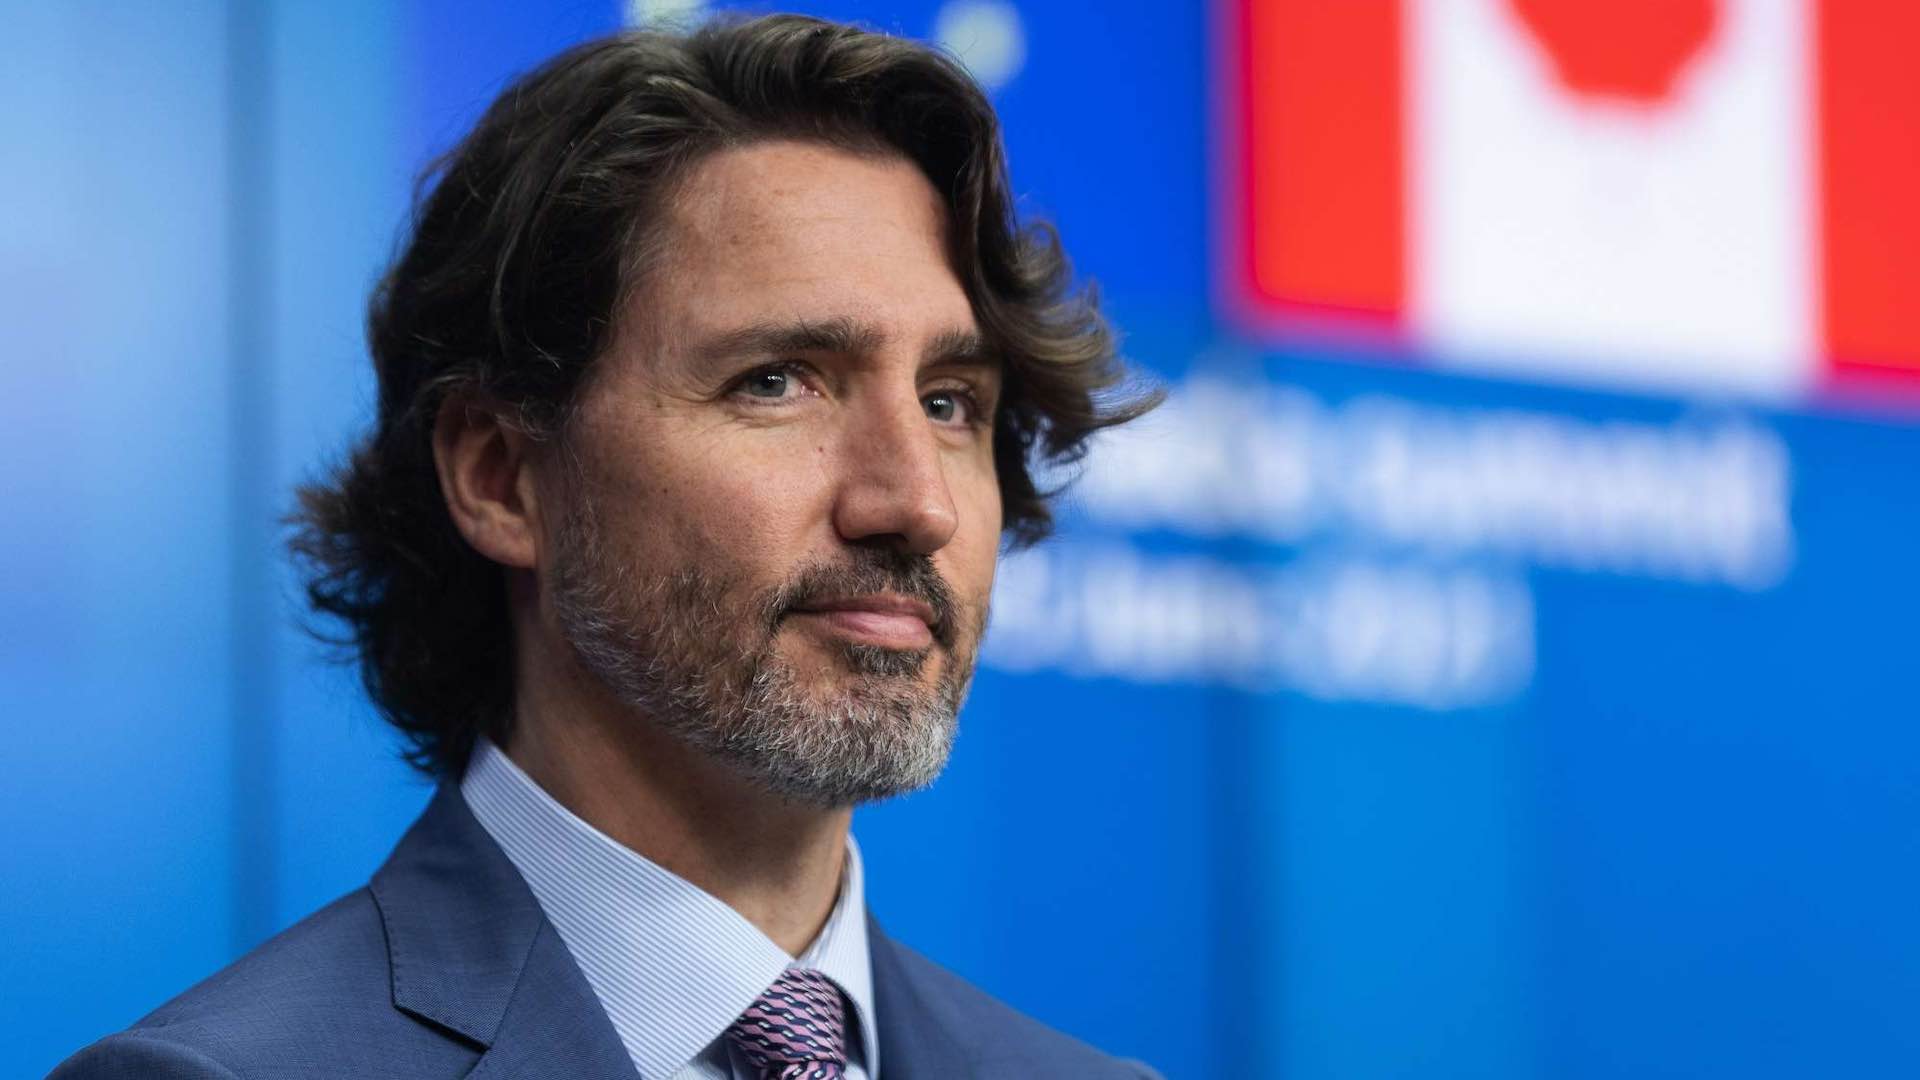 Calls grow for Trudeau's resignation following Toronto defeat